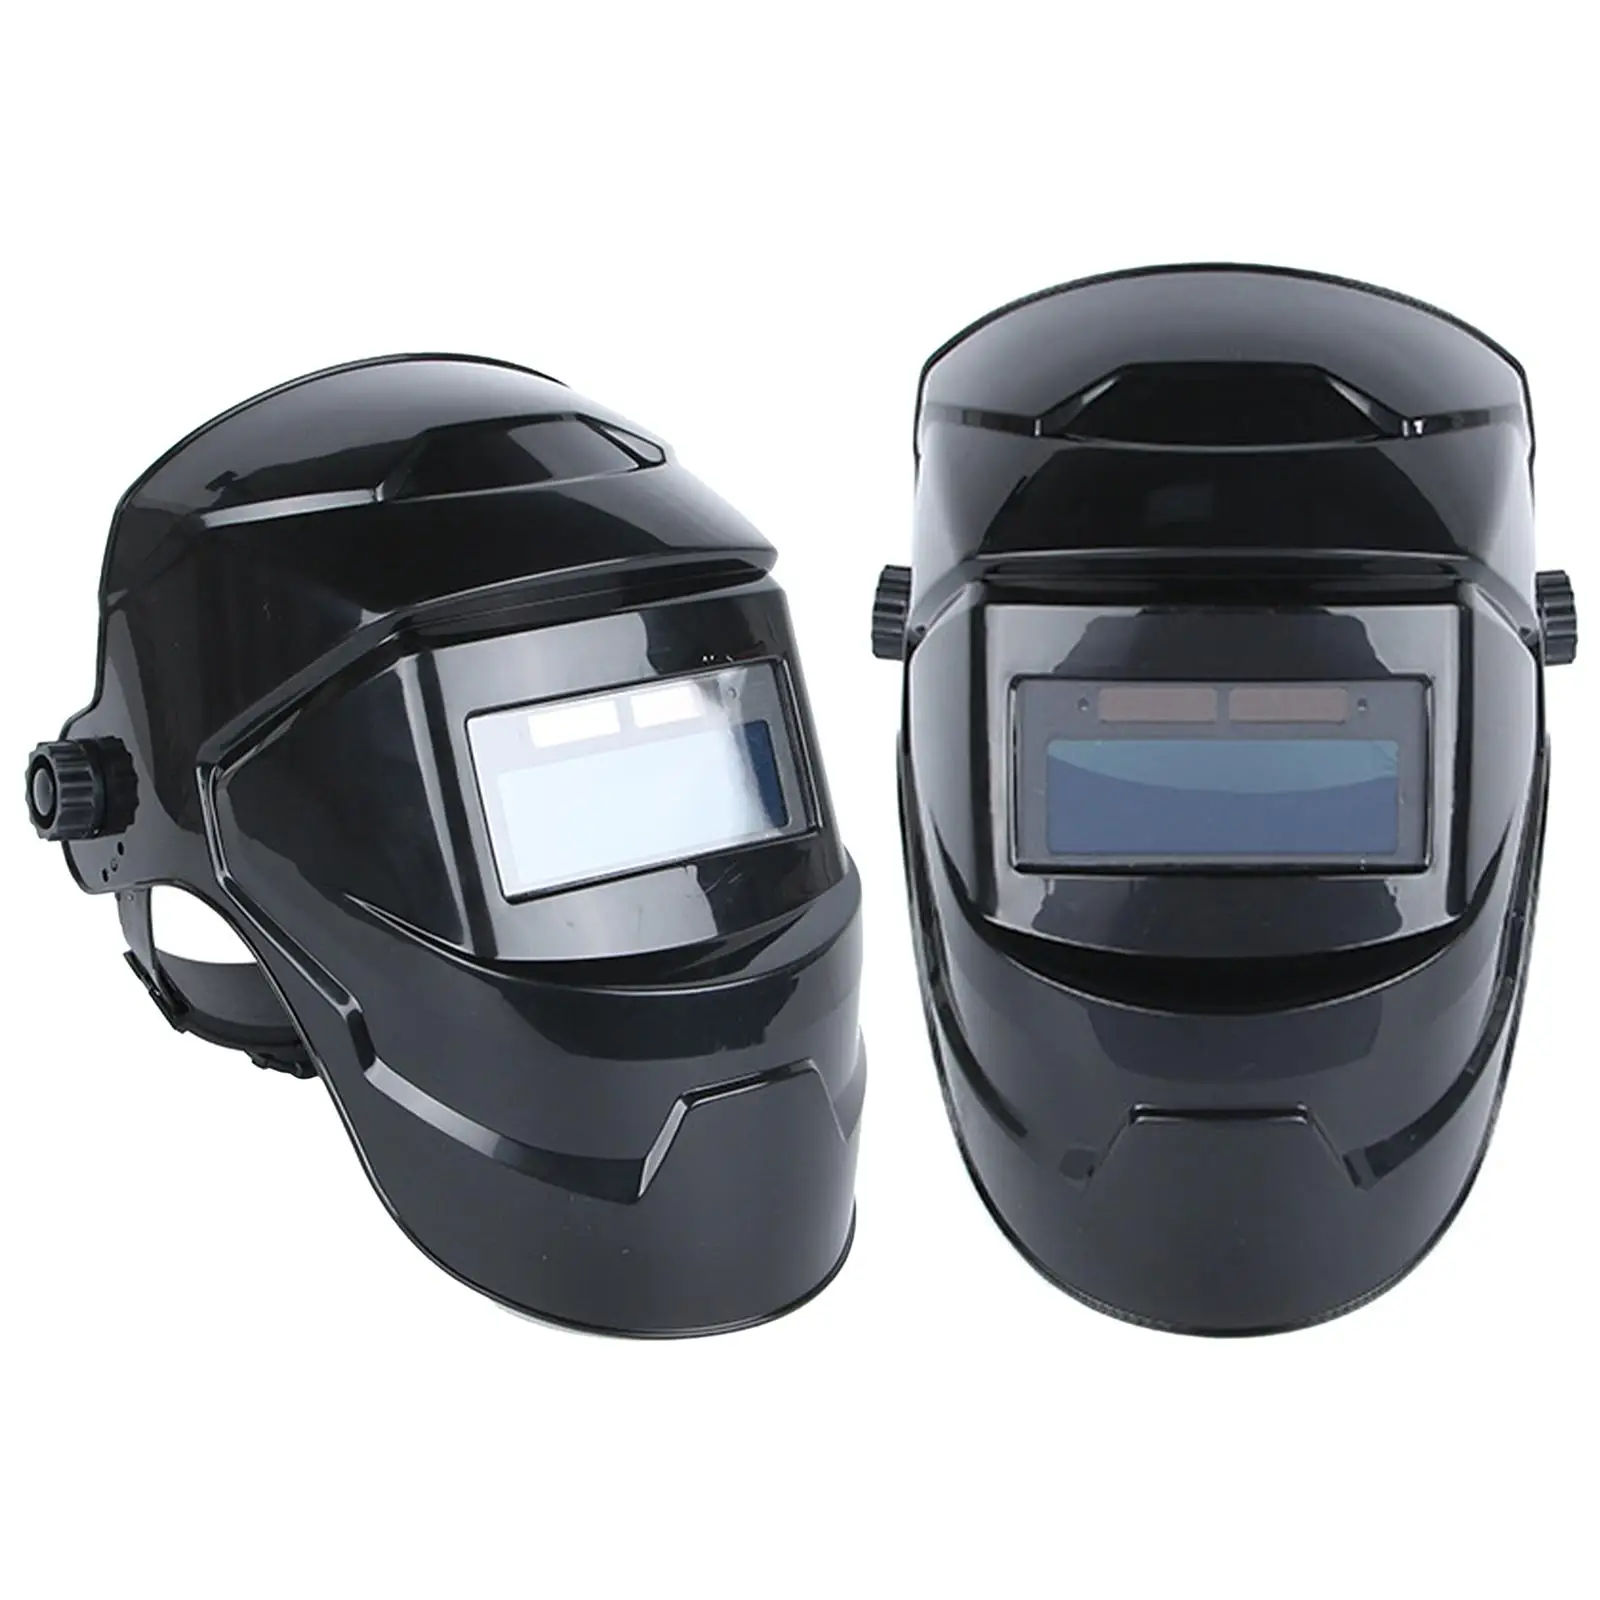 Auto Darkening Welding Helmet Breathable 180° Free Rotation Welding Helmet Welder Mask for TIG Mig ARC All Welding Applications